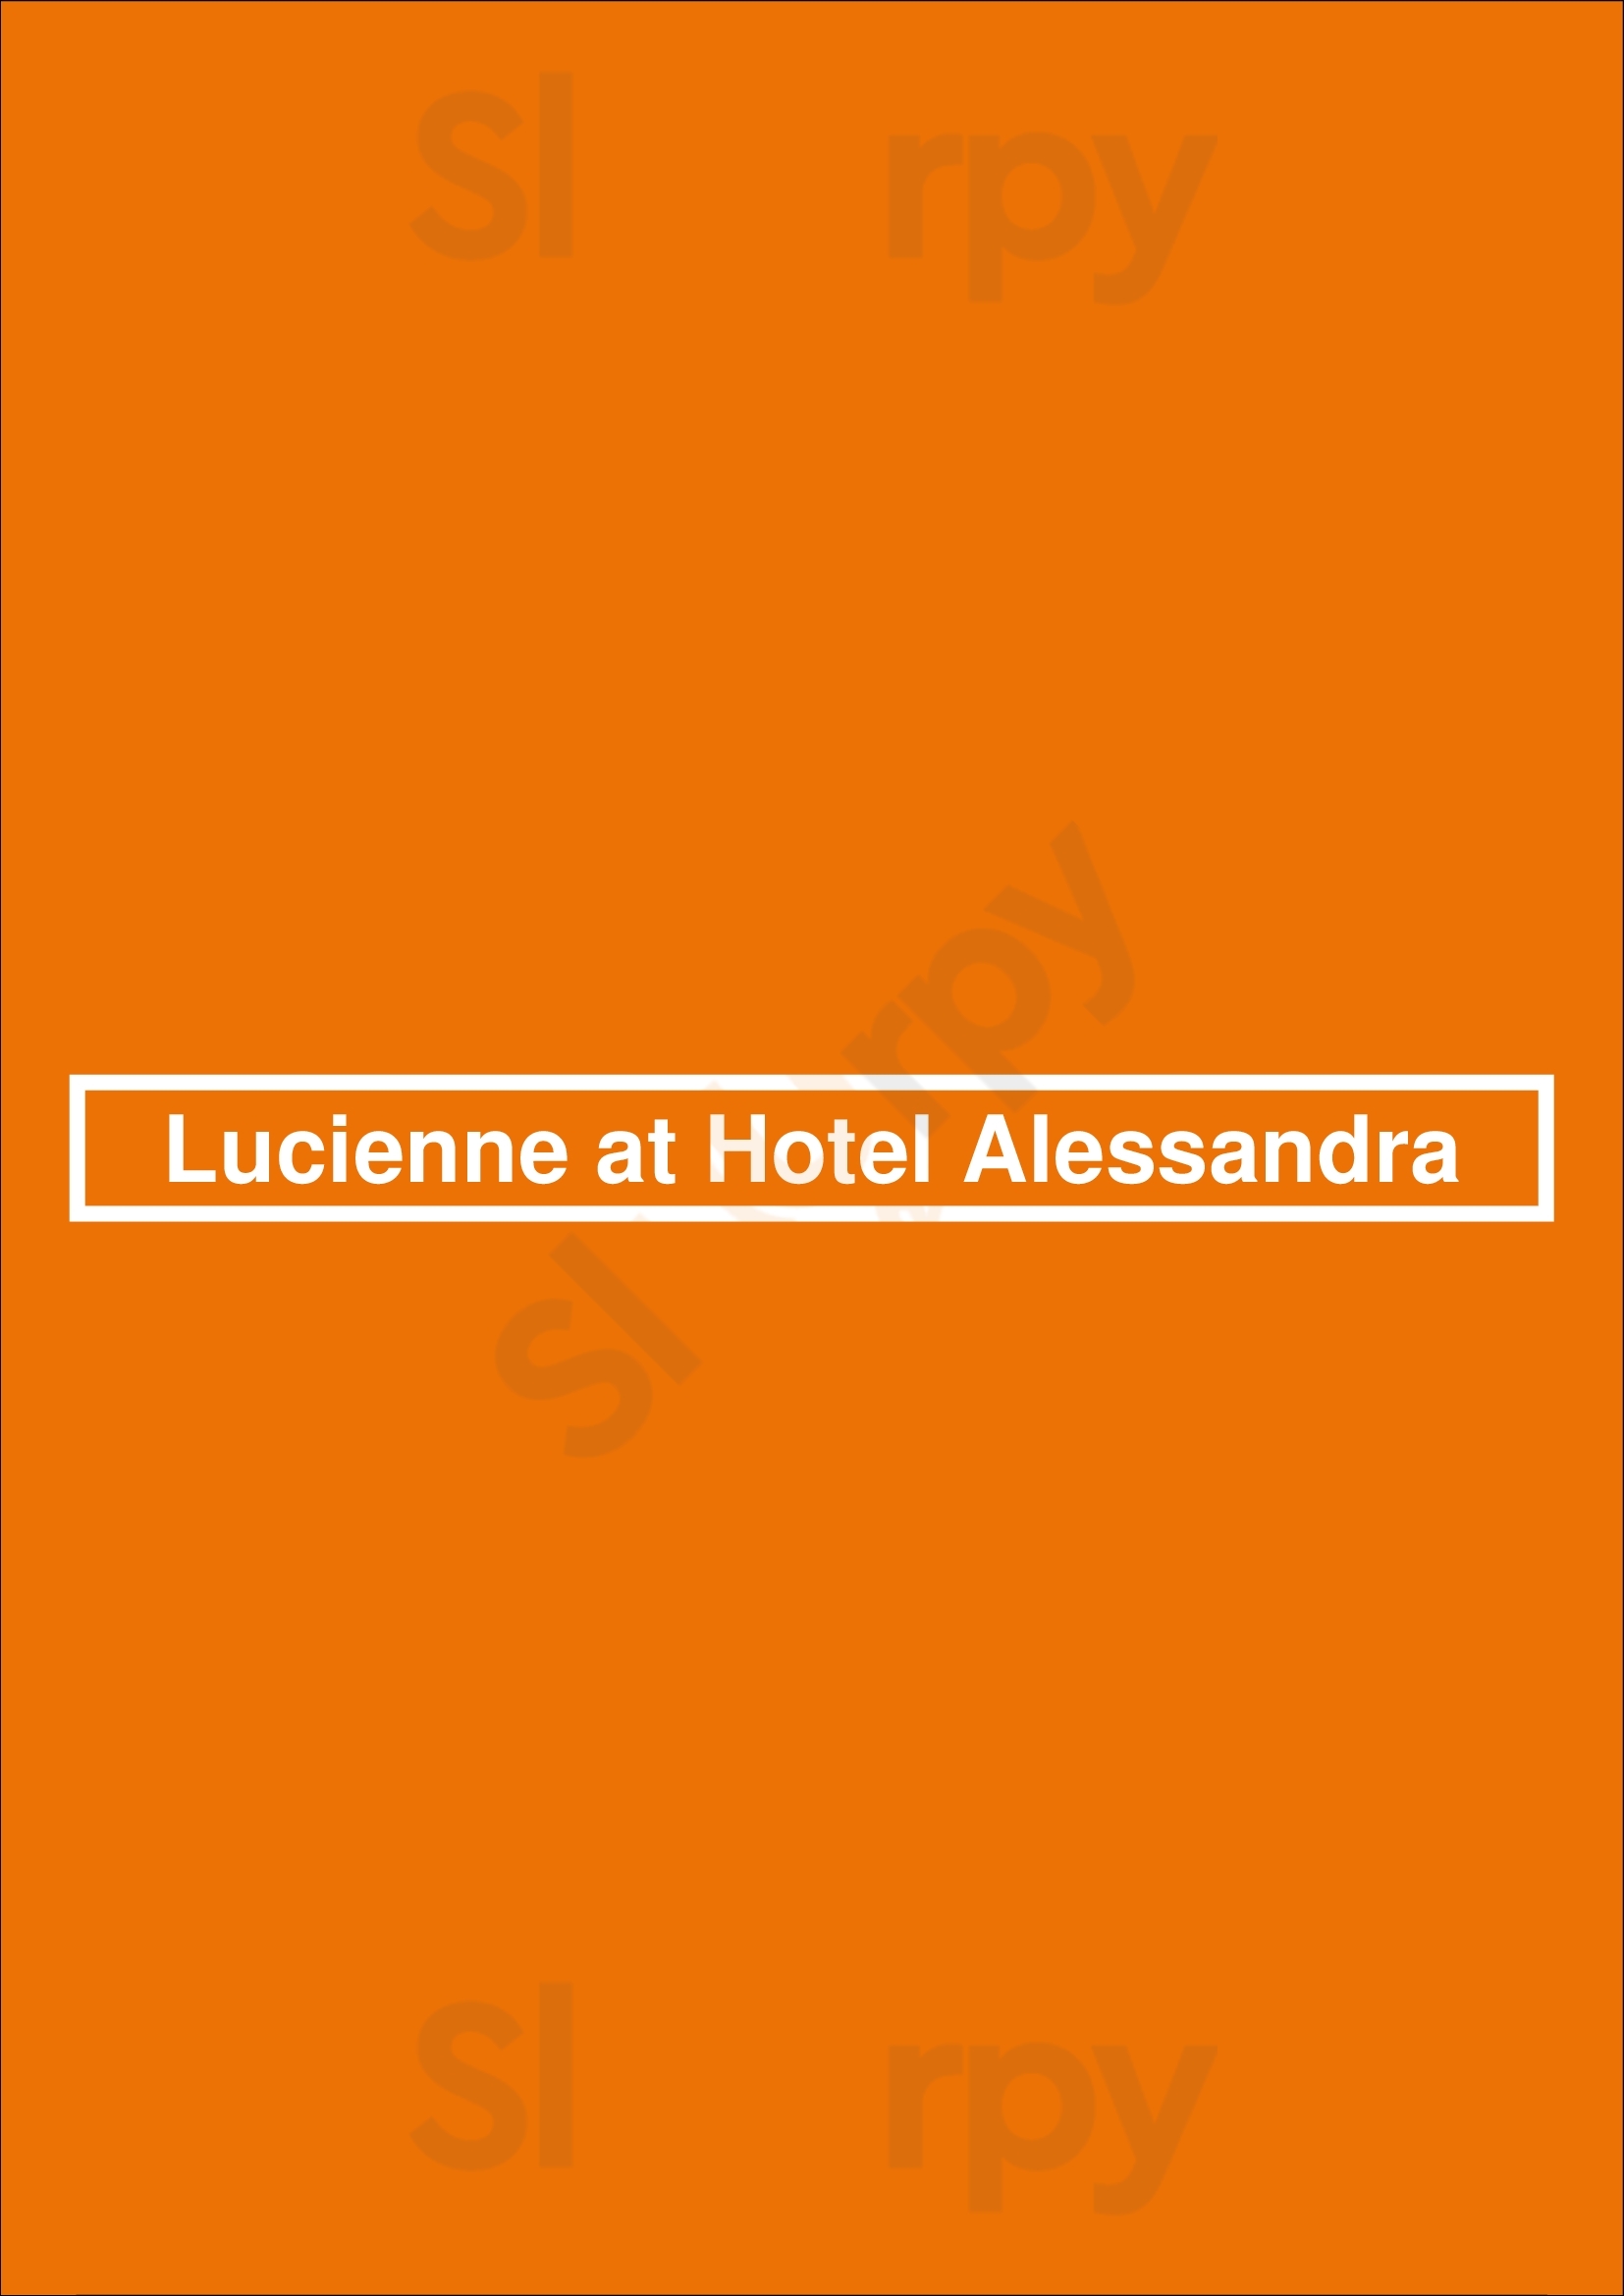 Lucienne At Hotel Alessandra Houston Menu - 1